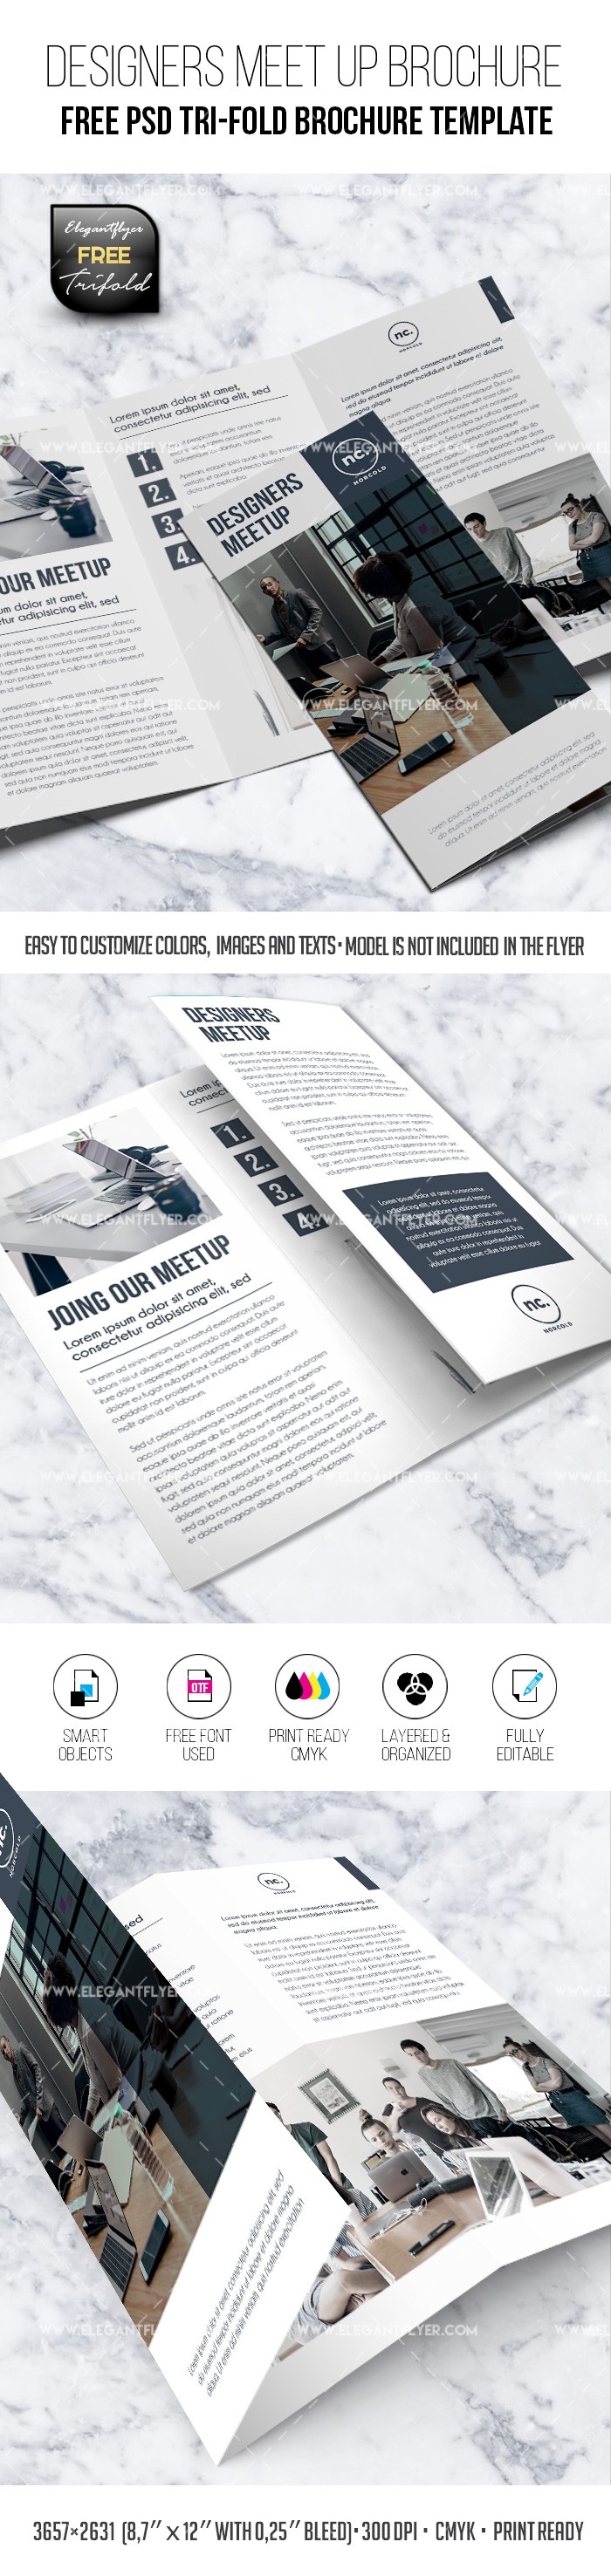 Designers Meet up – Free PSD Tri-Fold Brochure Template by ElegantFlyer